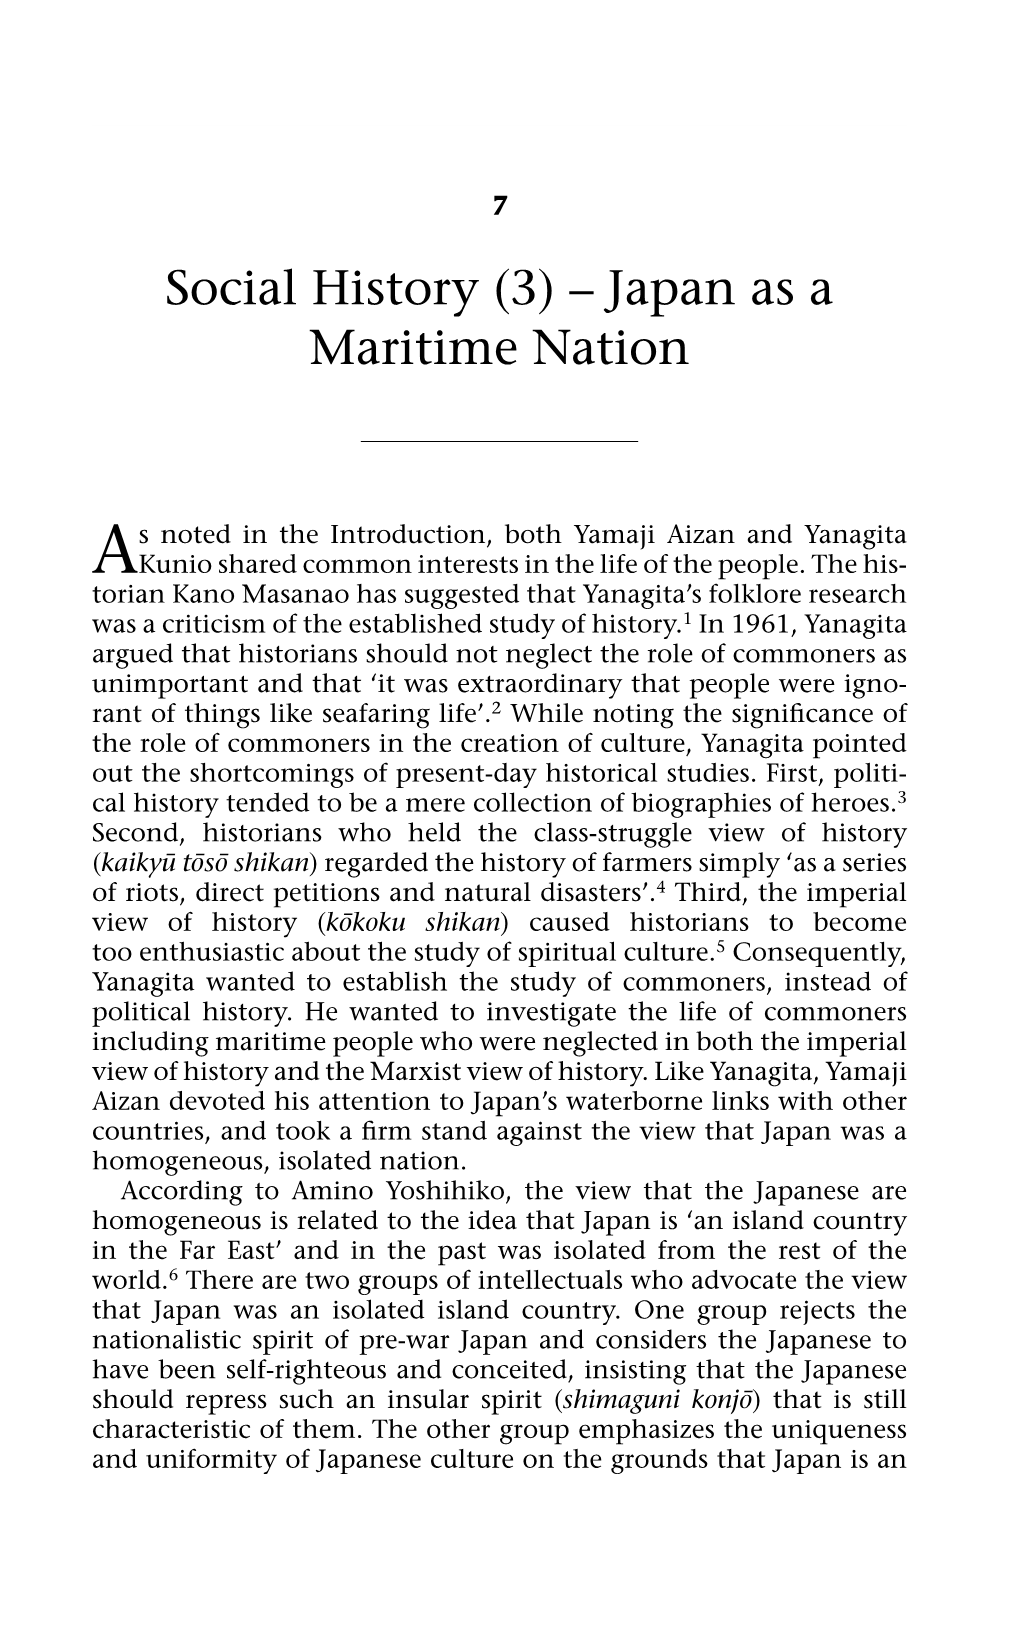 Japan As a Maritime Nation